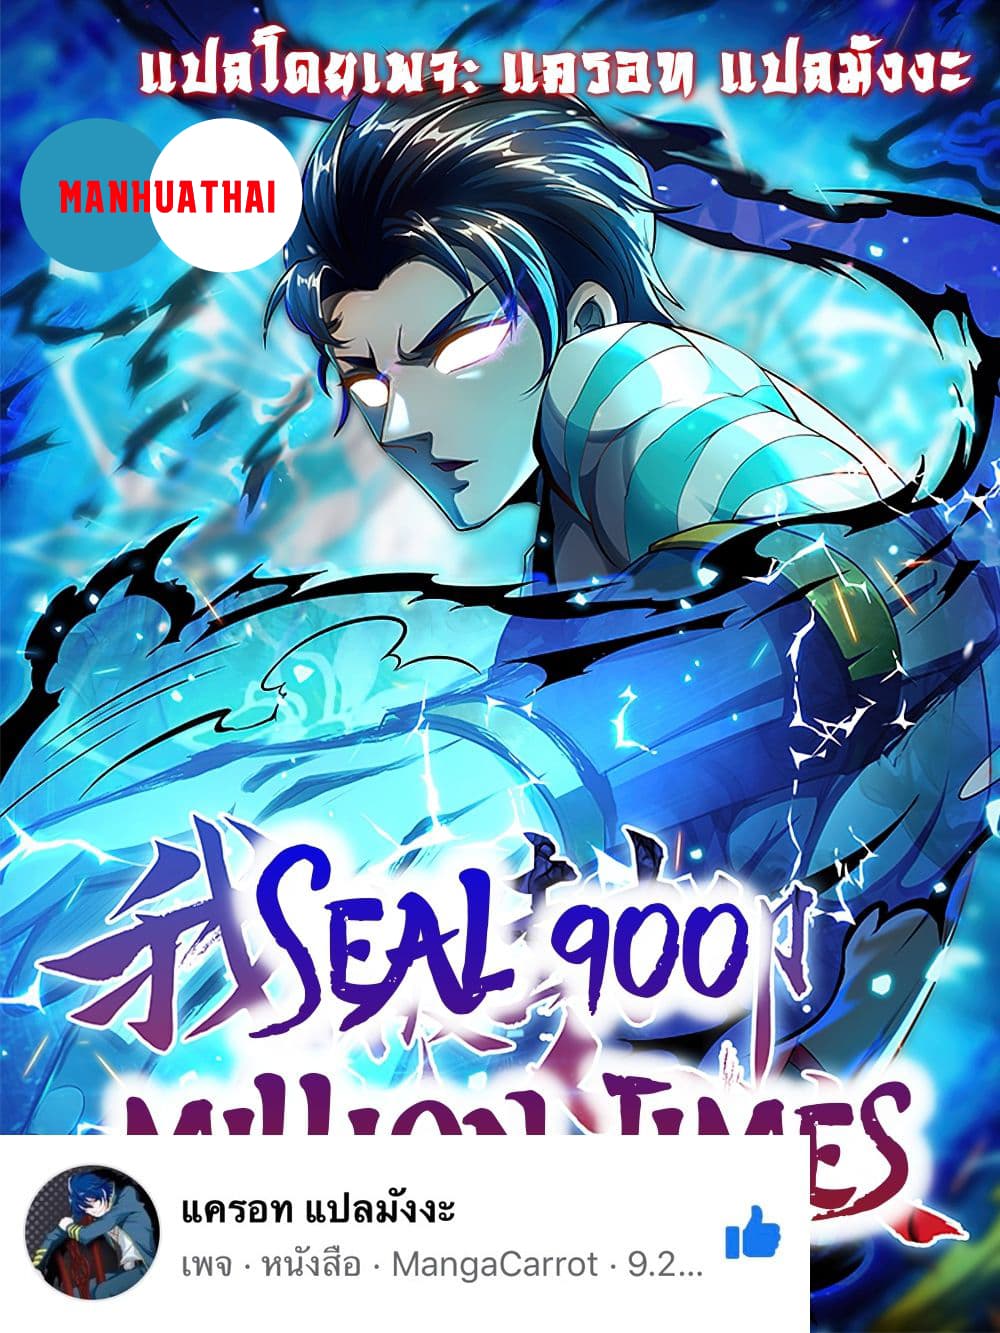 Seal 900 Million Times 22-22